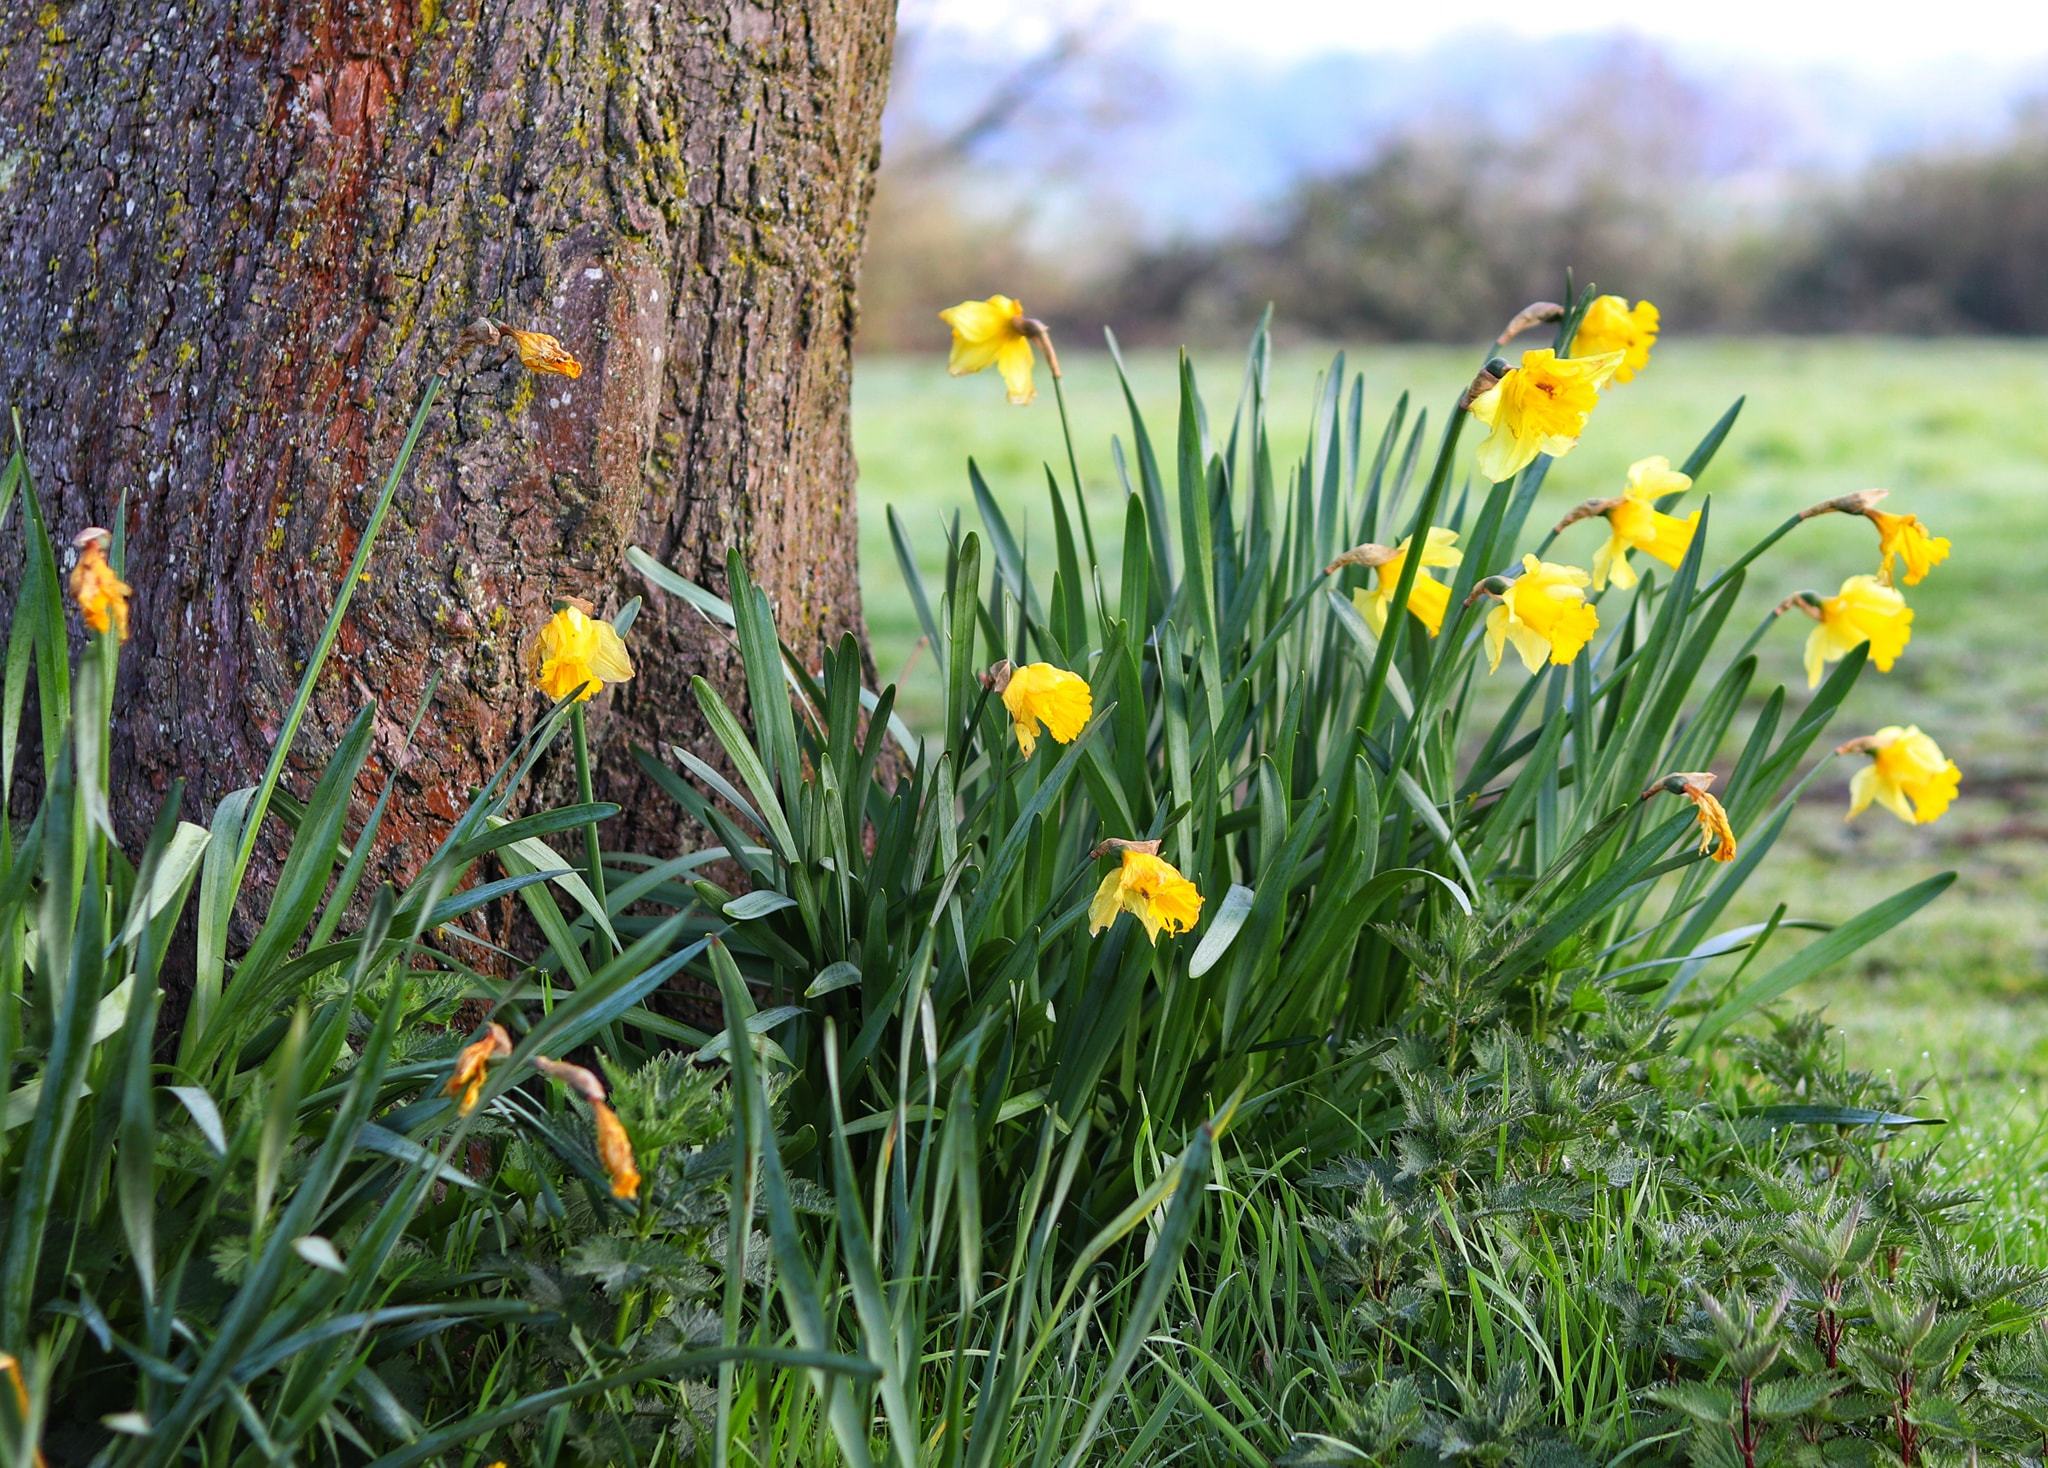 Daffodils in Marbury Park by Patricia Dyson